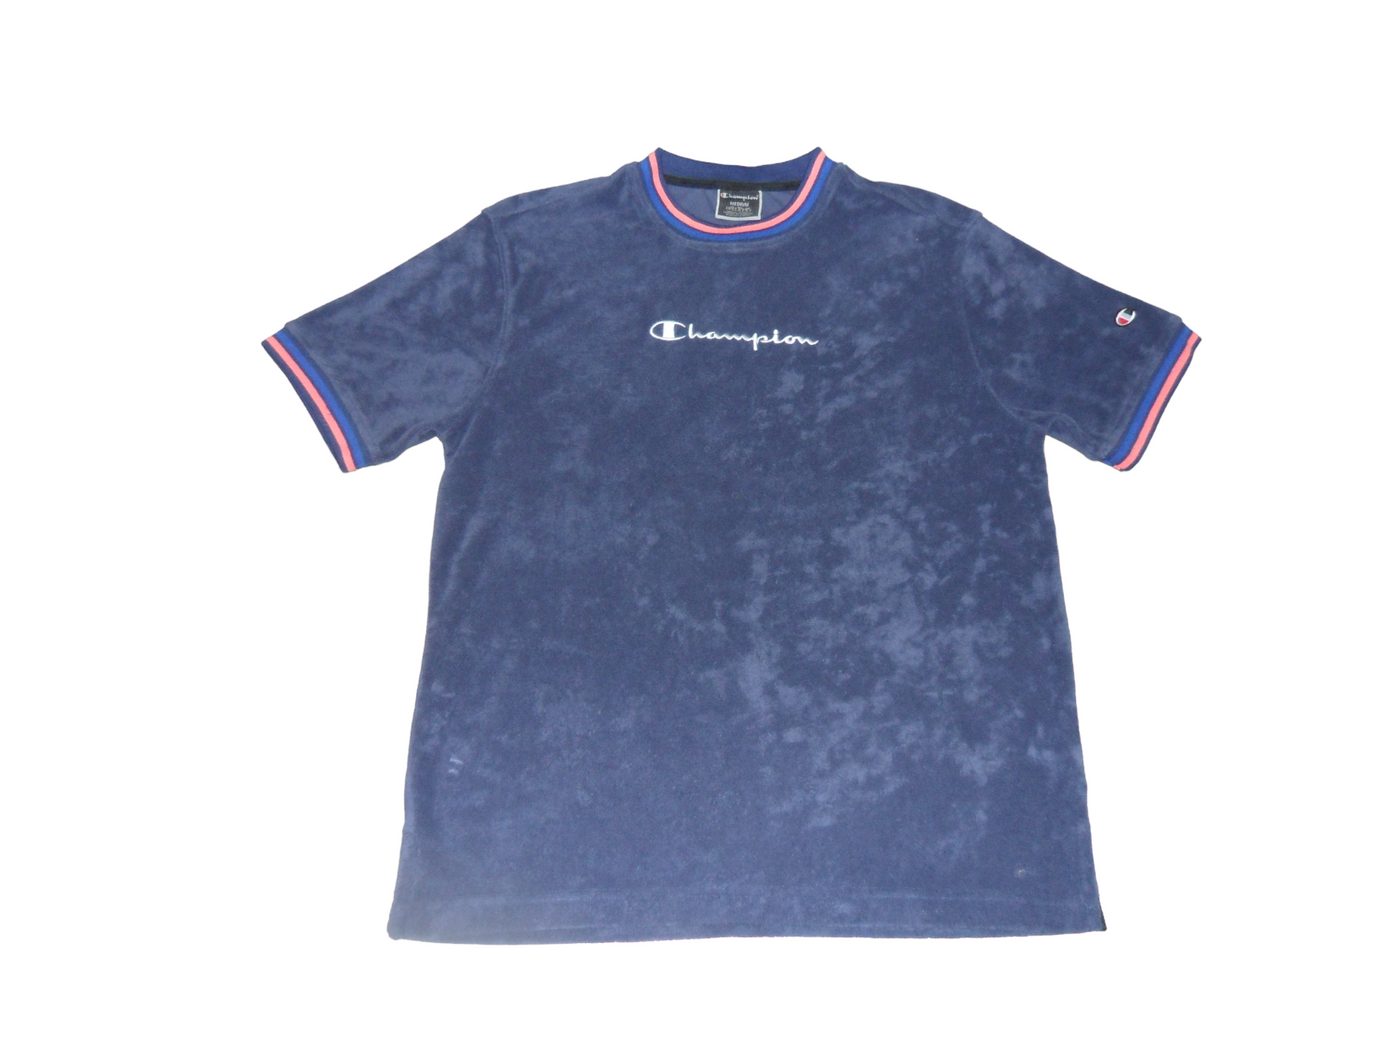 Vintage Champion Blue Terry T Shirt